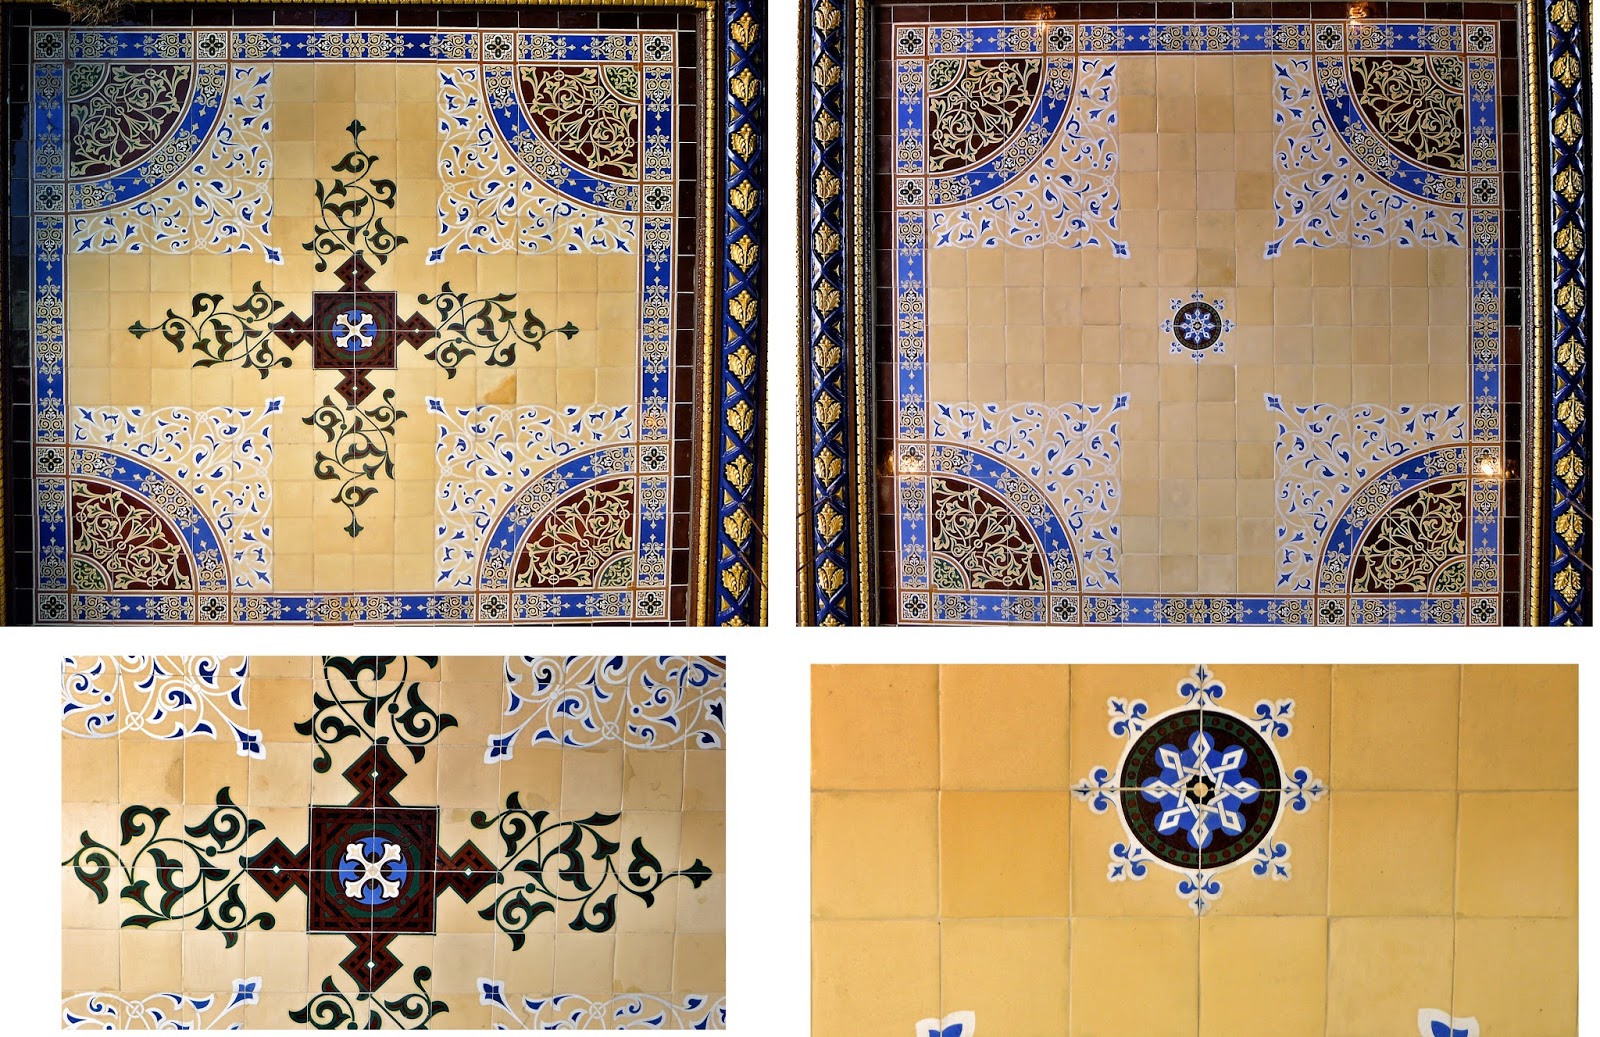 Then & Now: Minton Tiles at Bethesda Terrace, rain, ceiling